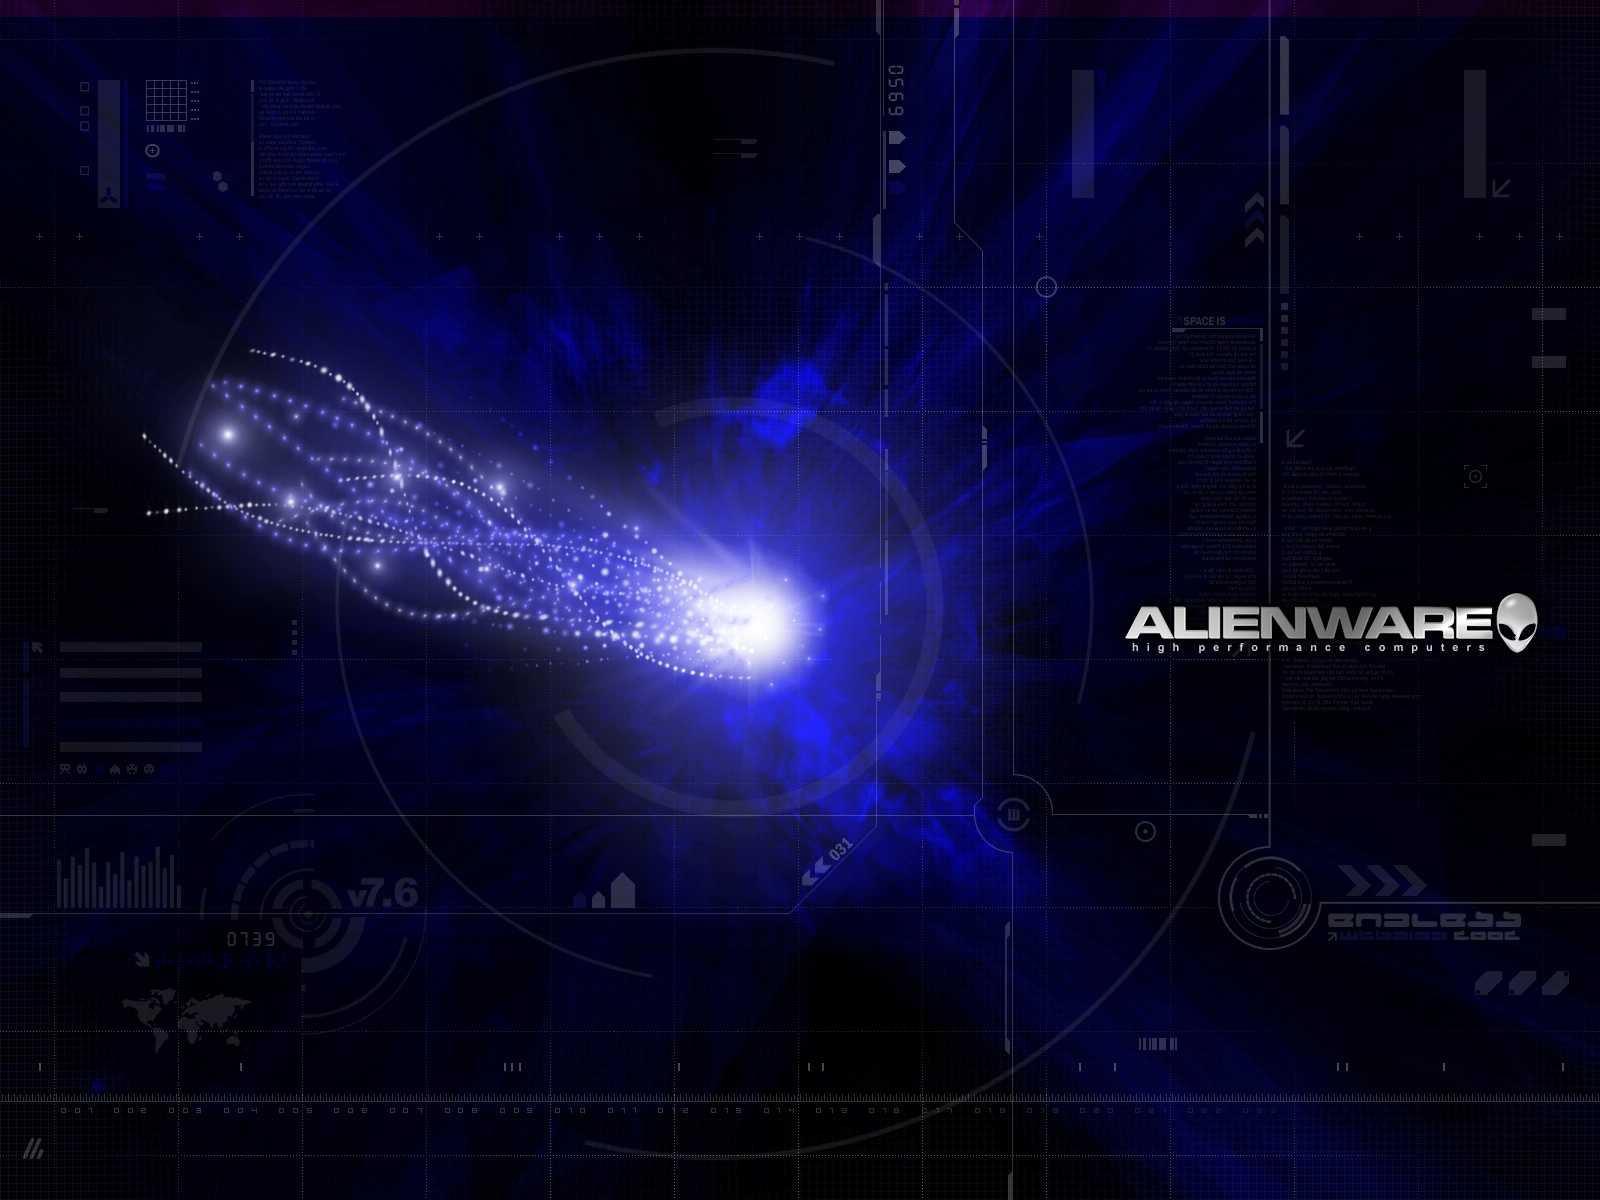 Alienware Blue Space Wallpaper Stock Photos